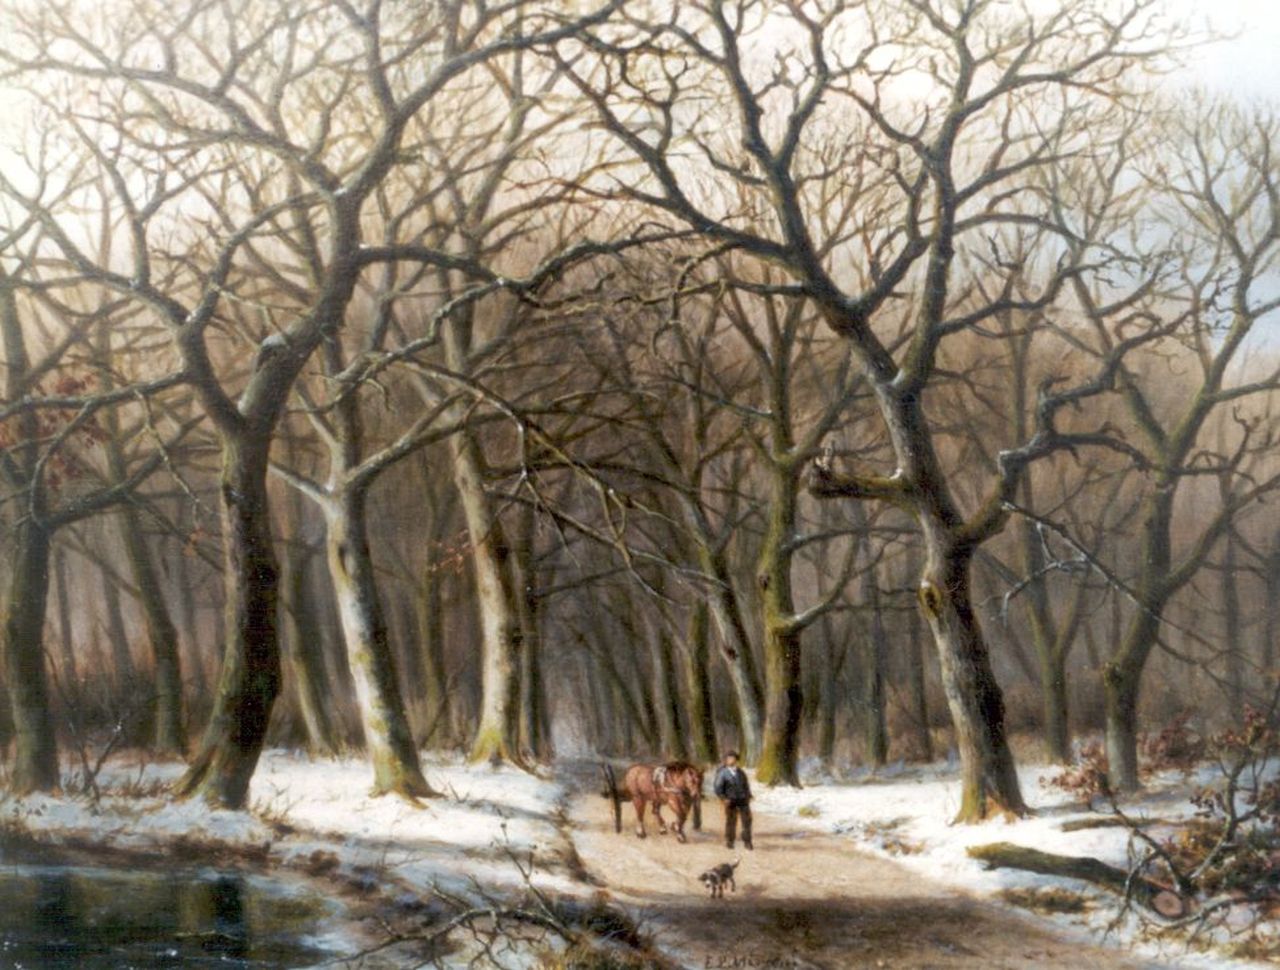 Mirani E.B.G.P.  | 'Everardus' Benedictus Gregorius Pagano Mirani, Gathering wood in winter, oil on panel 22.6 x 29.1 cm, signed l.c.